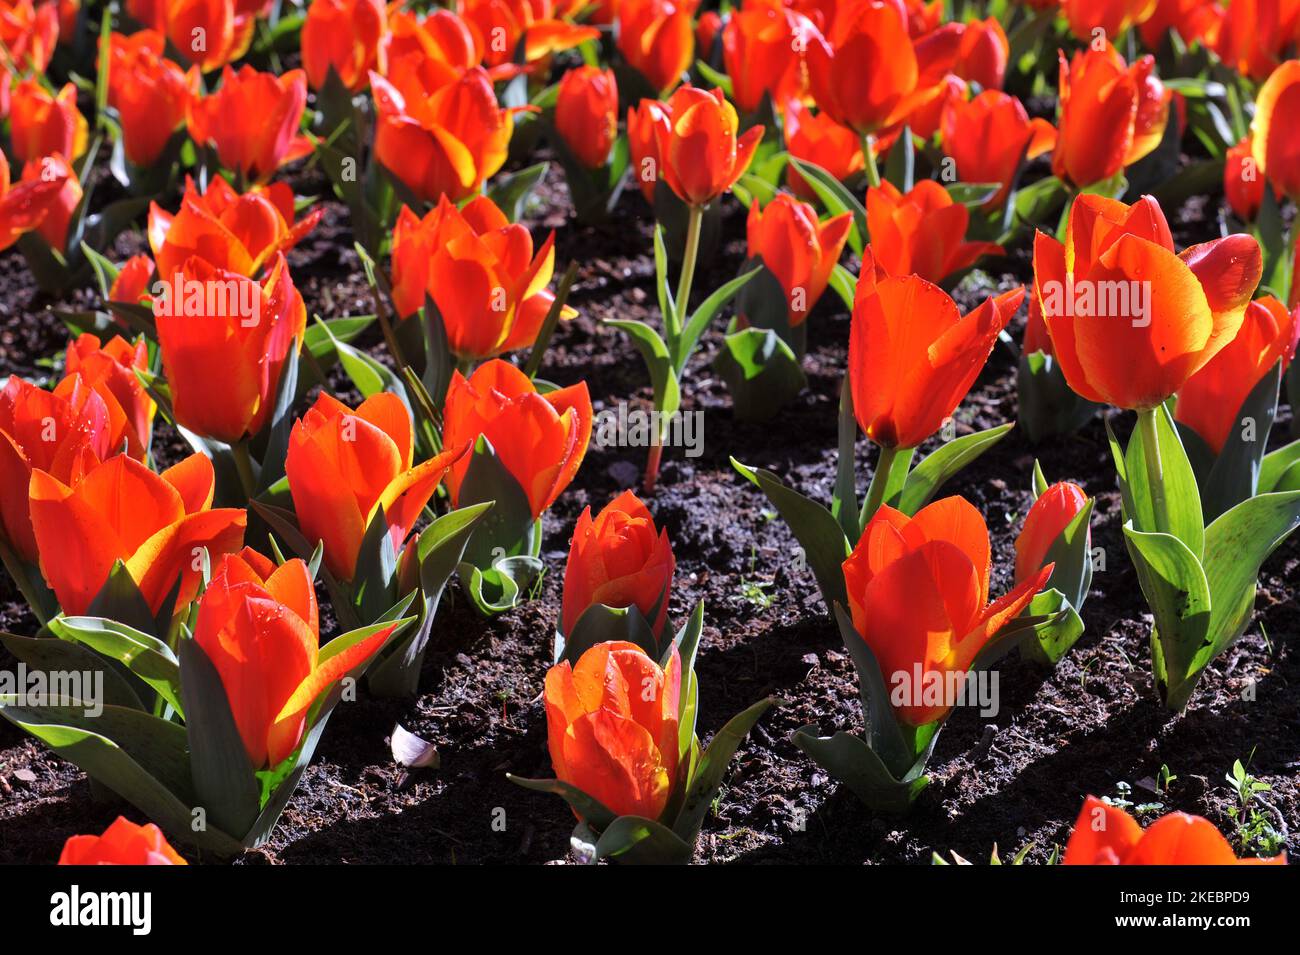 Orange-red Greigii tulips (Tulipa) Treasure bloom in a garden in April Stock Photo